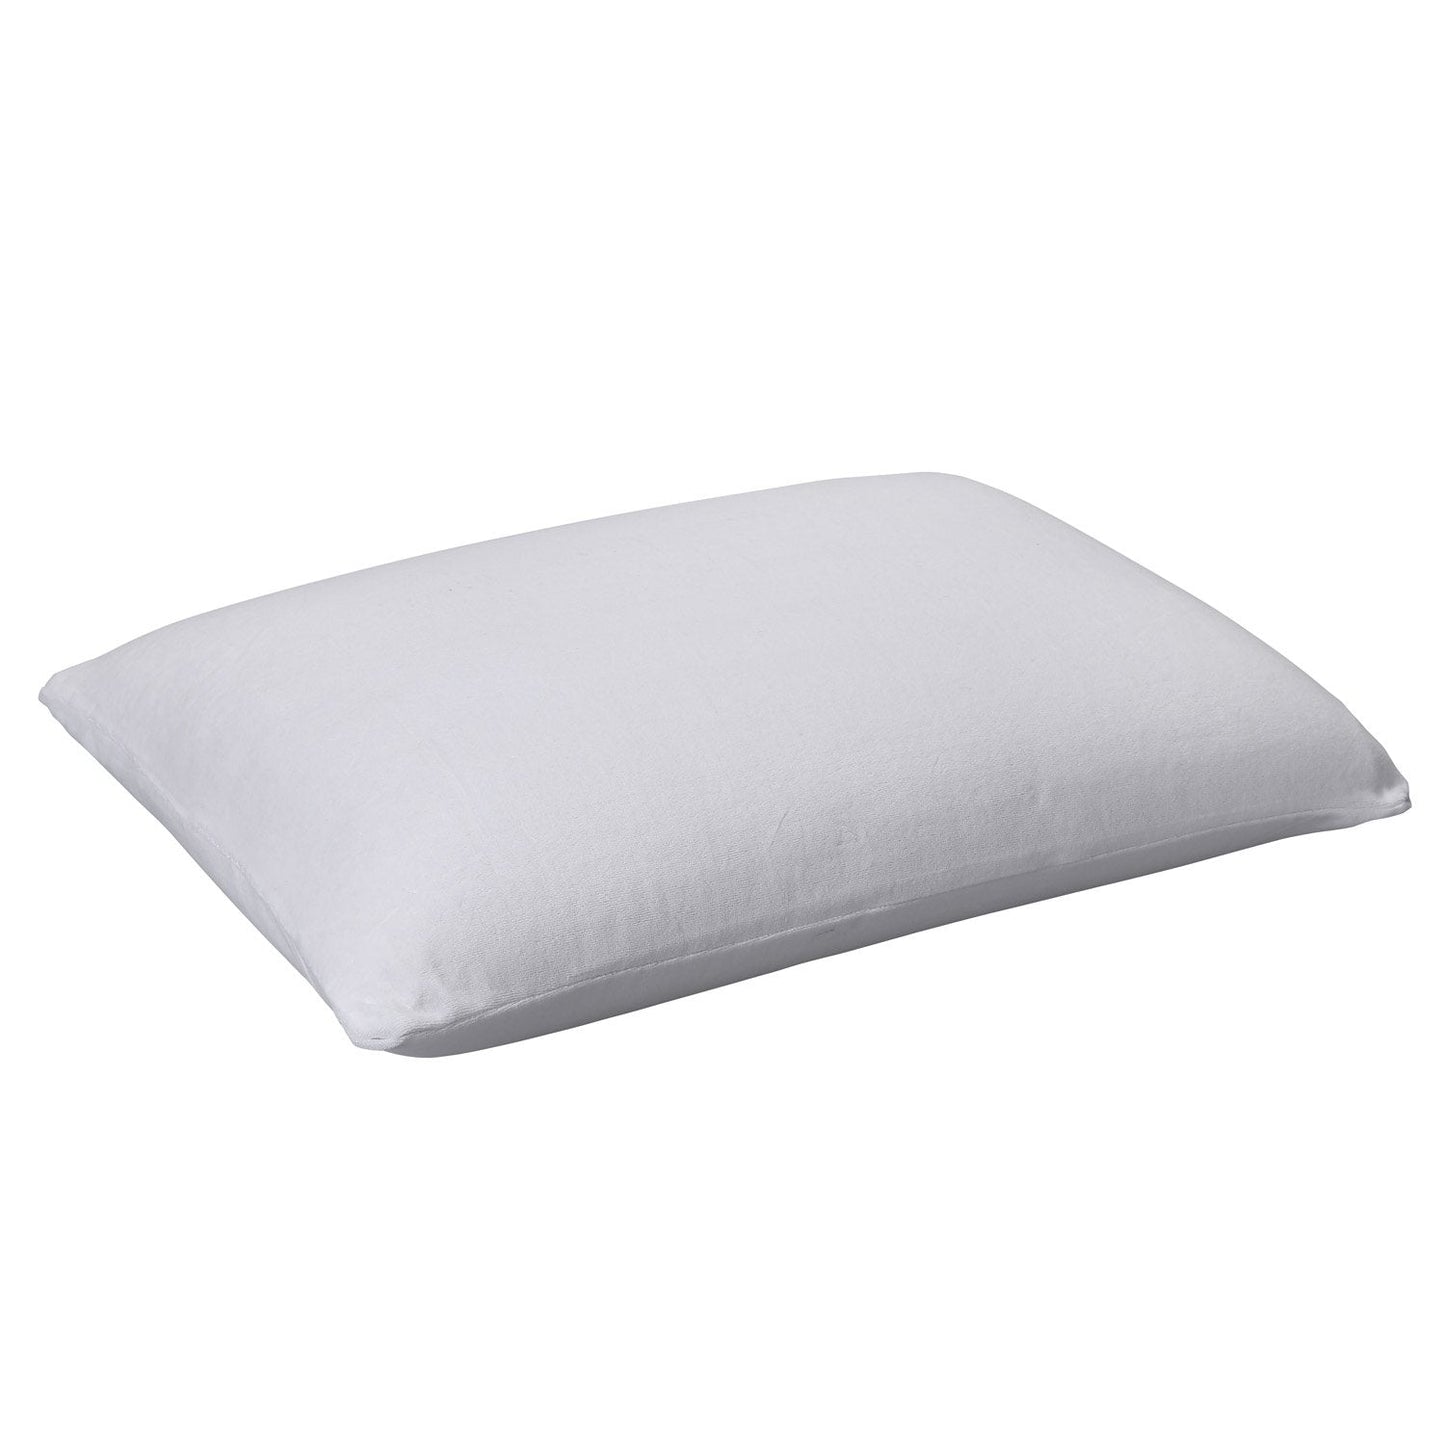 Deep Sleep Memory Foam Pillow - Low Profile by Bianca